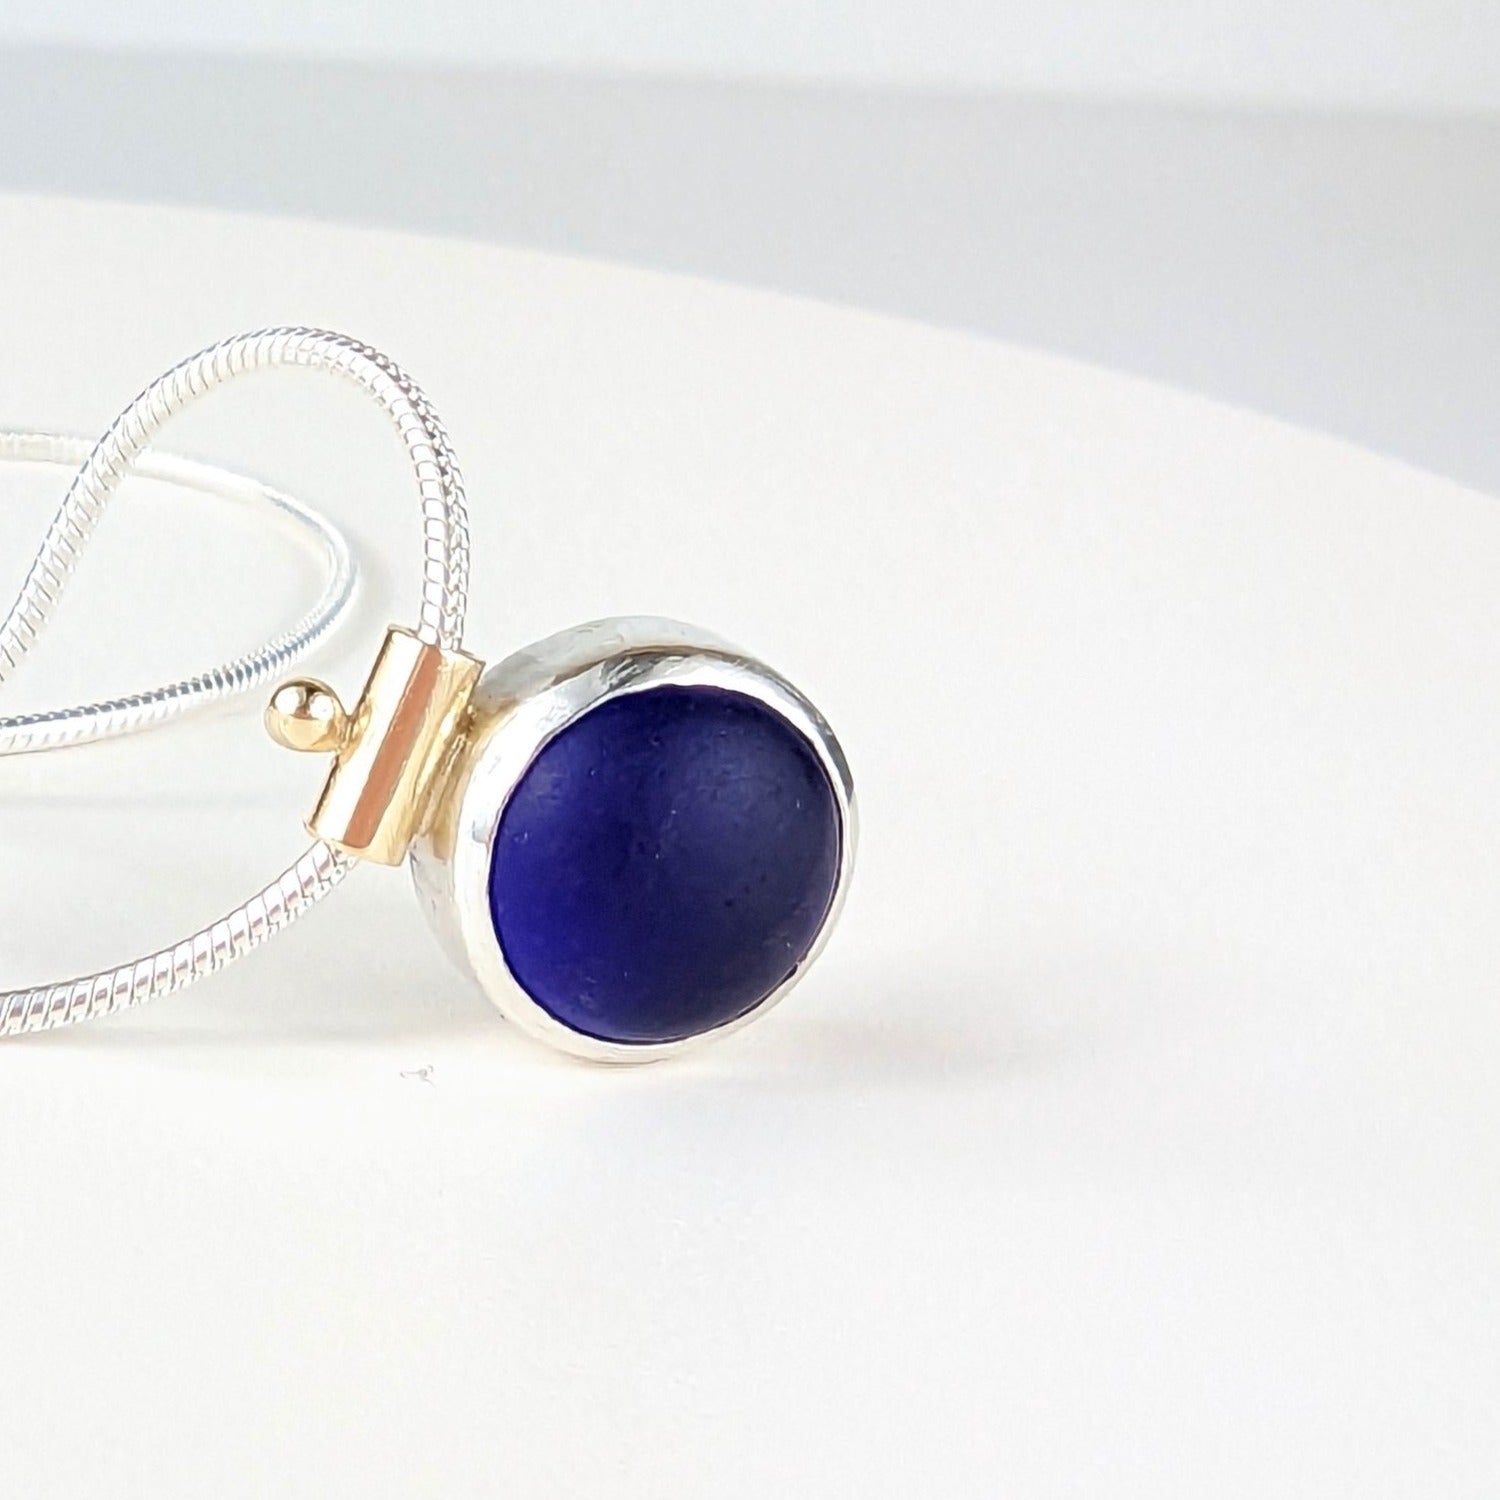 Deep cobalt blue sea glass necklace ALLURE collection - Booblinka Jewellery